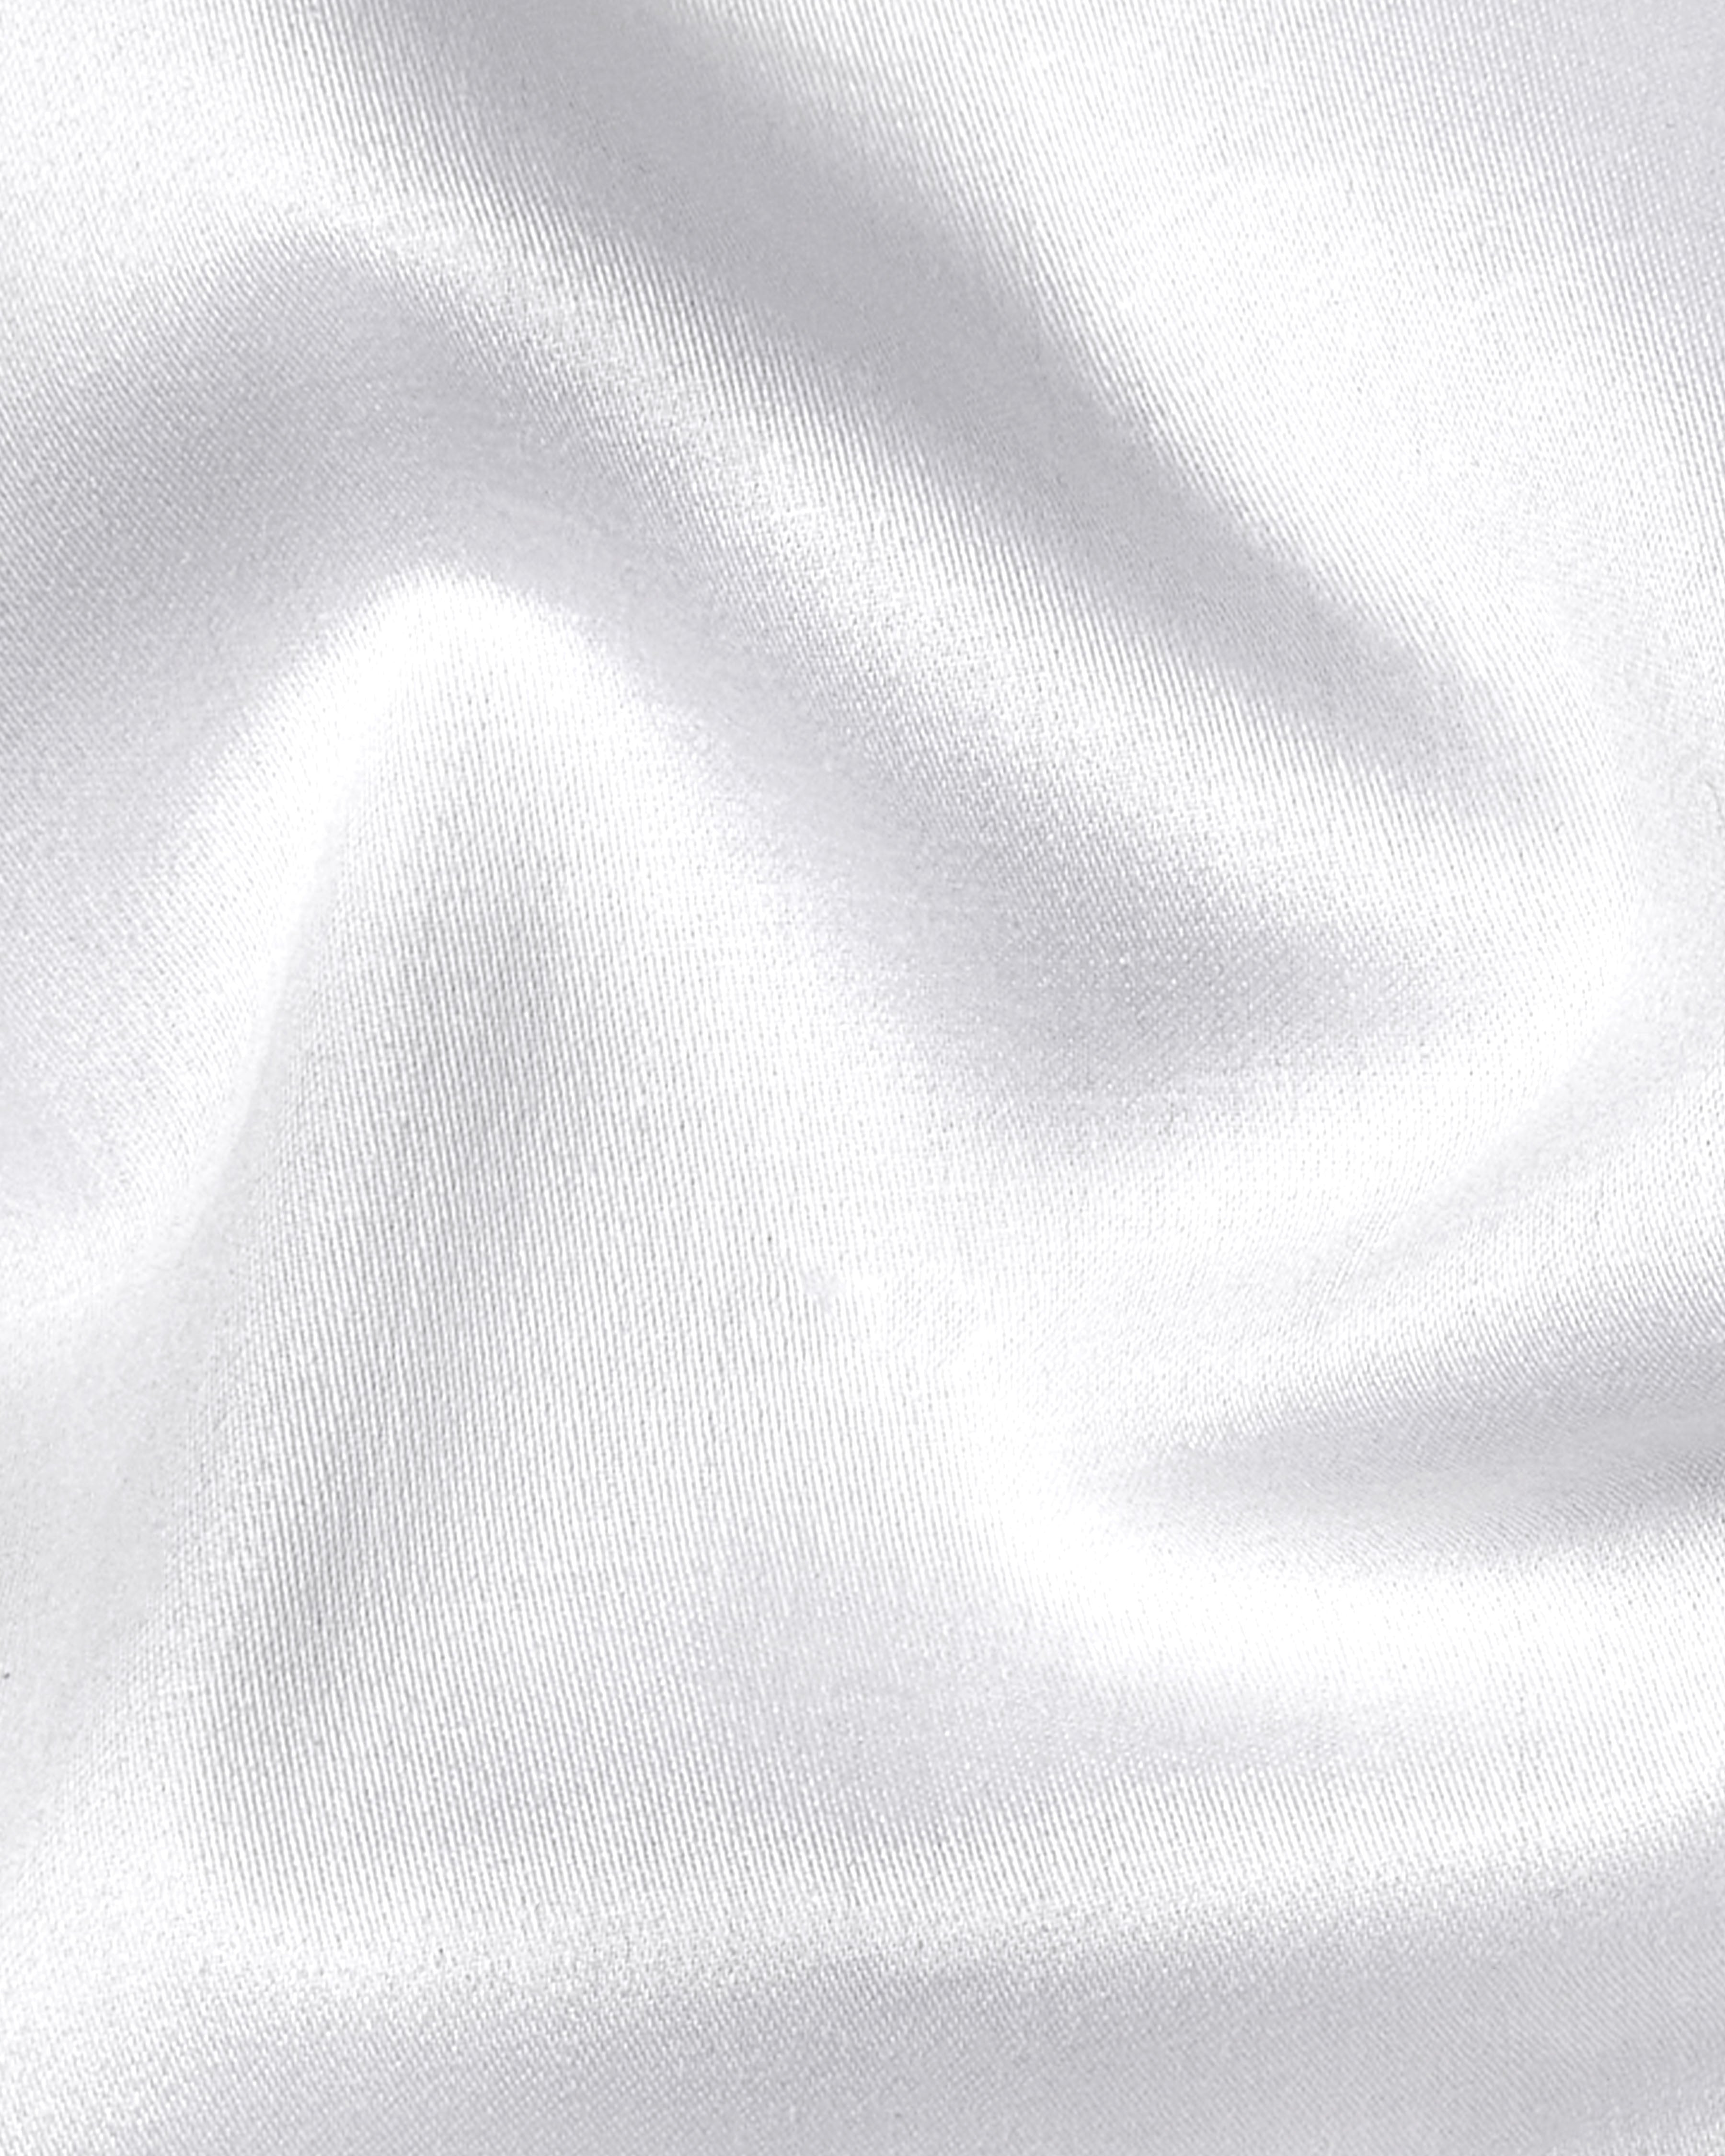 Bright White Subtle Sheen Zigzag patterned Premium Cotton Kurta Shirt 4551-KS-ZG-38, 4551-KS-ZG-H-38, 4551-KS-ZG-39, 4551-KS-ZG-H-39, 4551-KS-ZG-40, 4551-KS-ZG-H-40, 4551-KS-ZG-42, 4551-KS-ZG-H-42, 4551-KS-ZG-44, 4551-KS-ZG-H-44, 4551-KS-ZG-46, 4551-KS-ZG-H-46, 4551-KS-ZG-48, 4551-KS-ZG-H-48, 4551-KS-ZG-50, 4551-KS-ZG-H-50, 4551-KS-ZG-52, 4551-KS-ZG-H-52